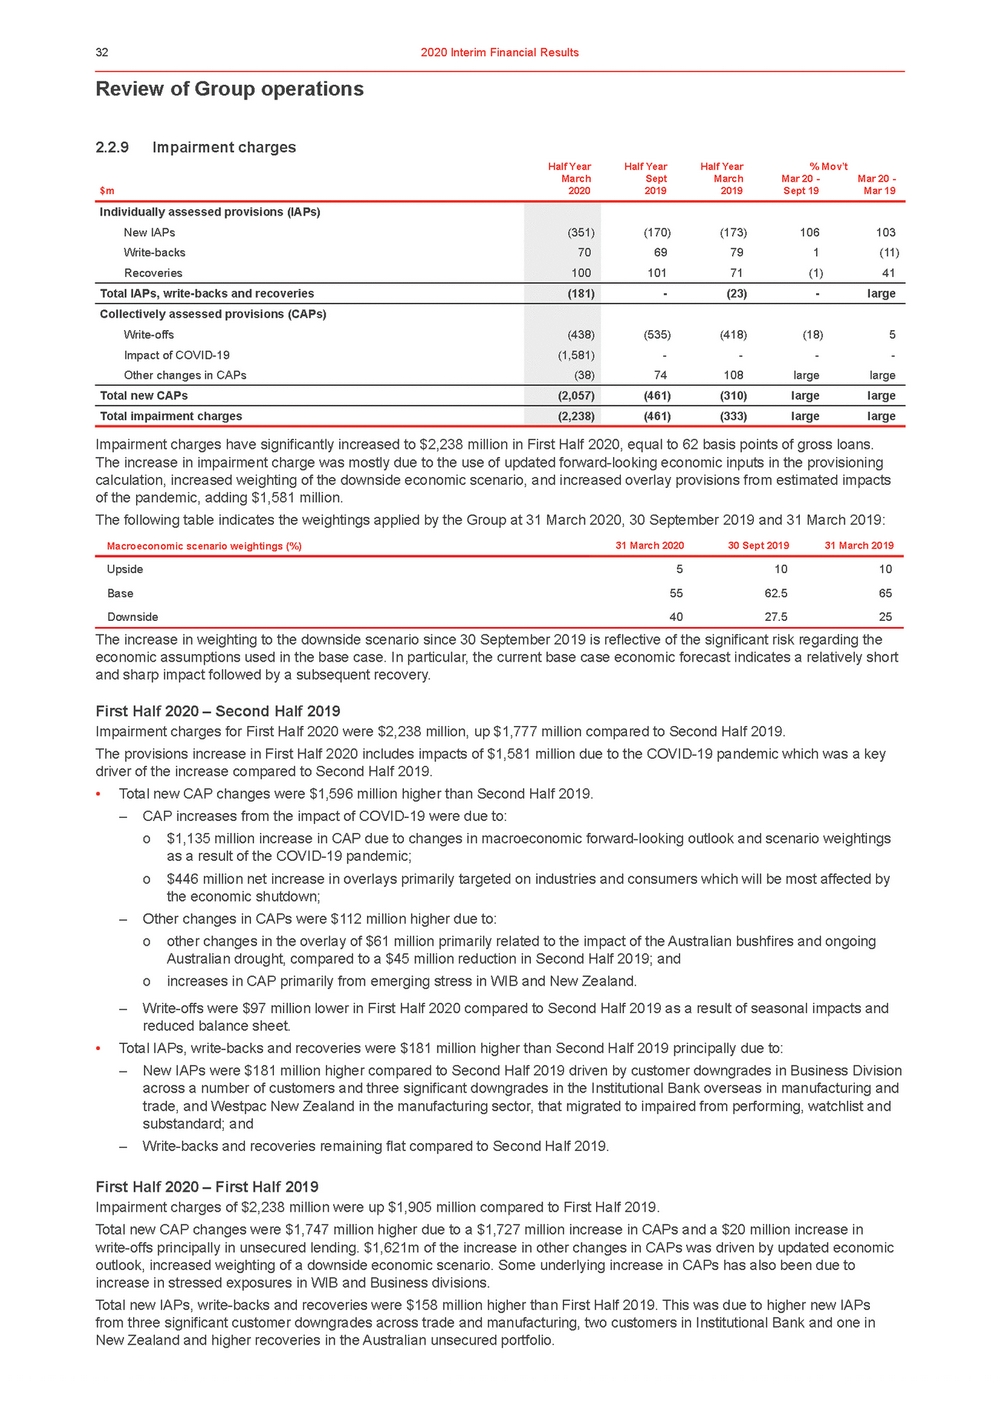 11676-3-ex1_westpac 2020 interim financial results announcement_page_037.jpg